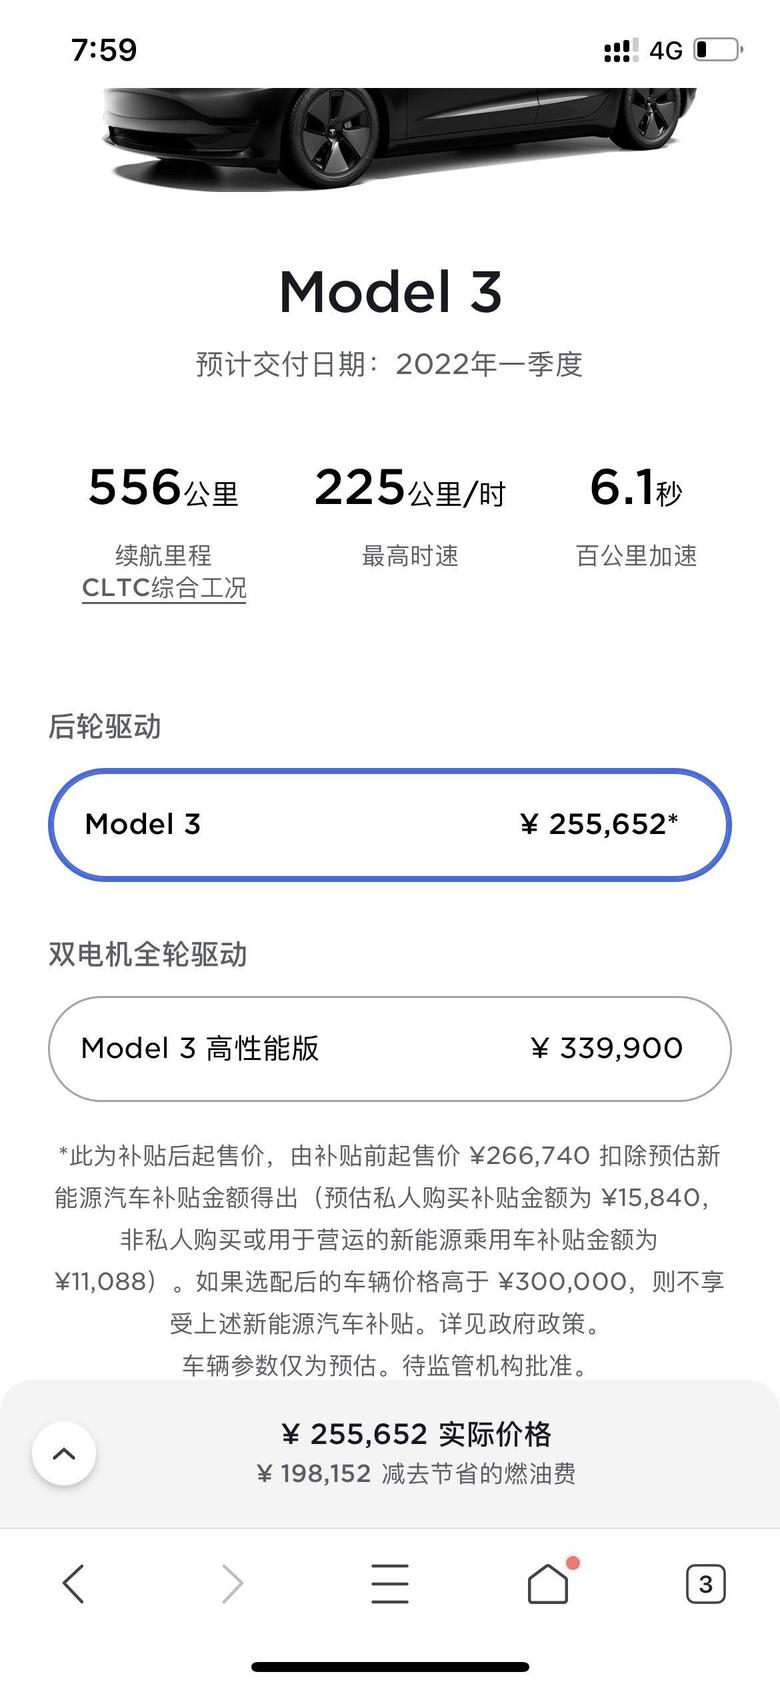 model 3 特斯拉毛豆3，24号再涨五千。